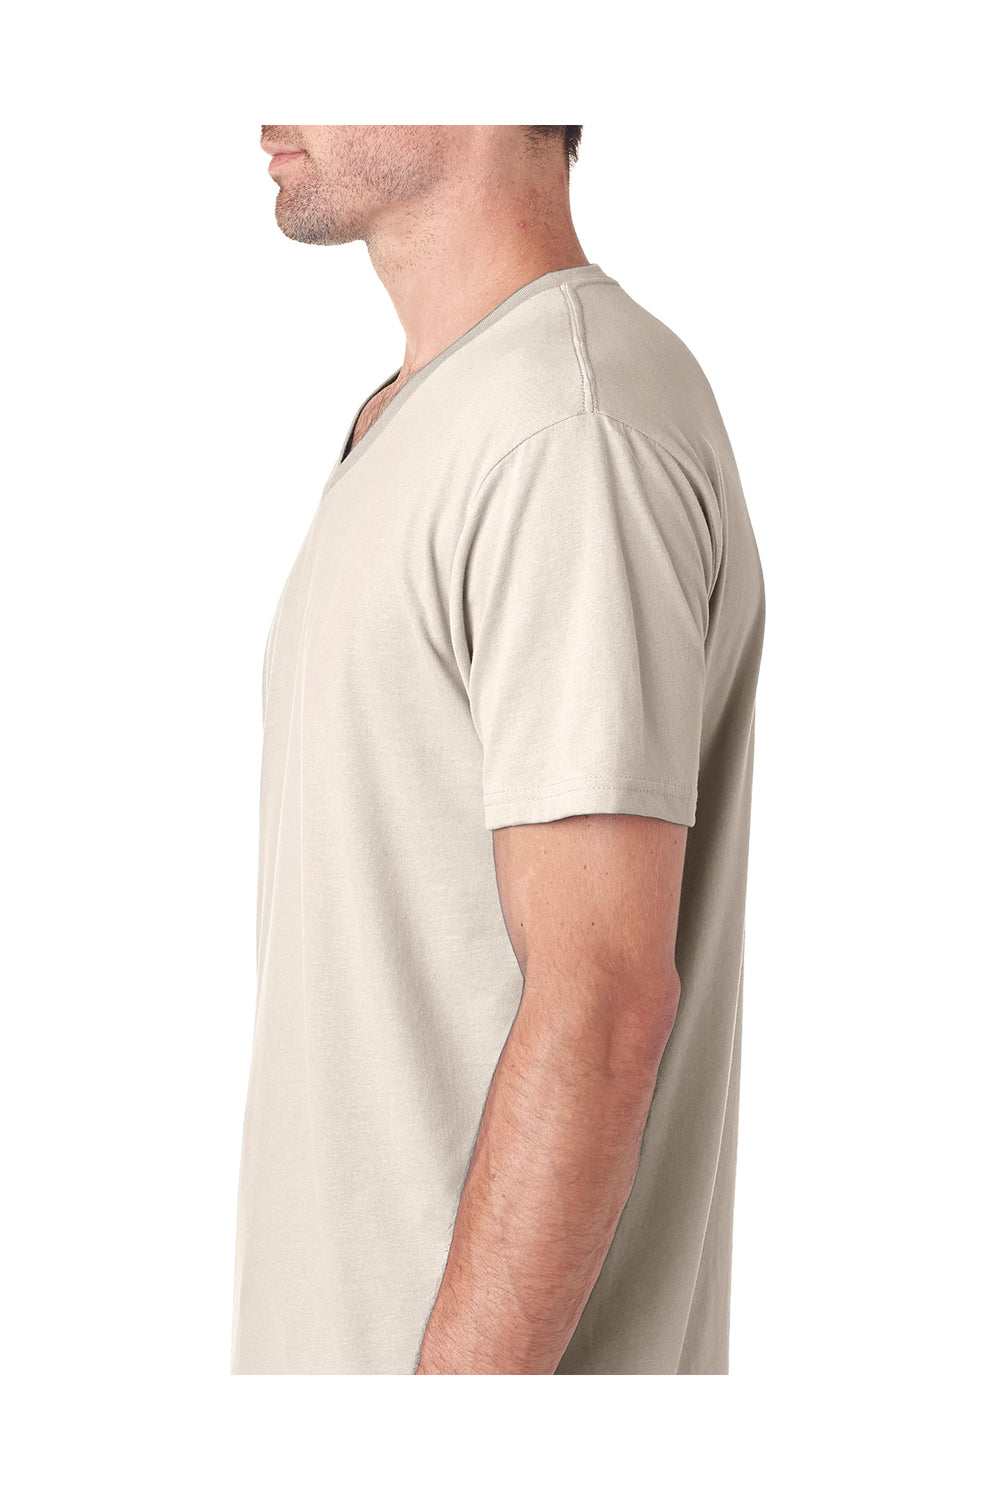 Next Level 6440 Mens Sueded Jersey Short Sleeve V-Neck T-Shirt Sand Brown Side